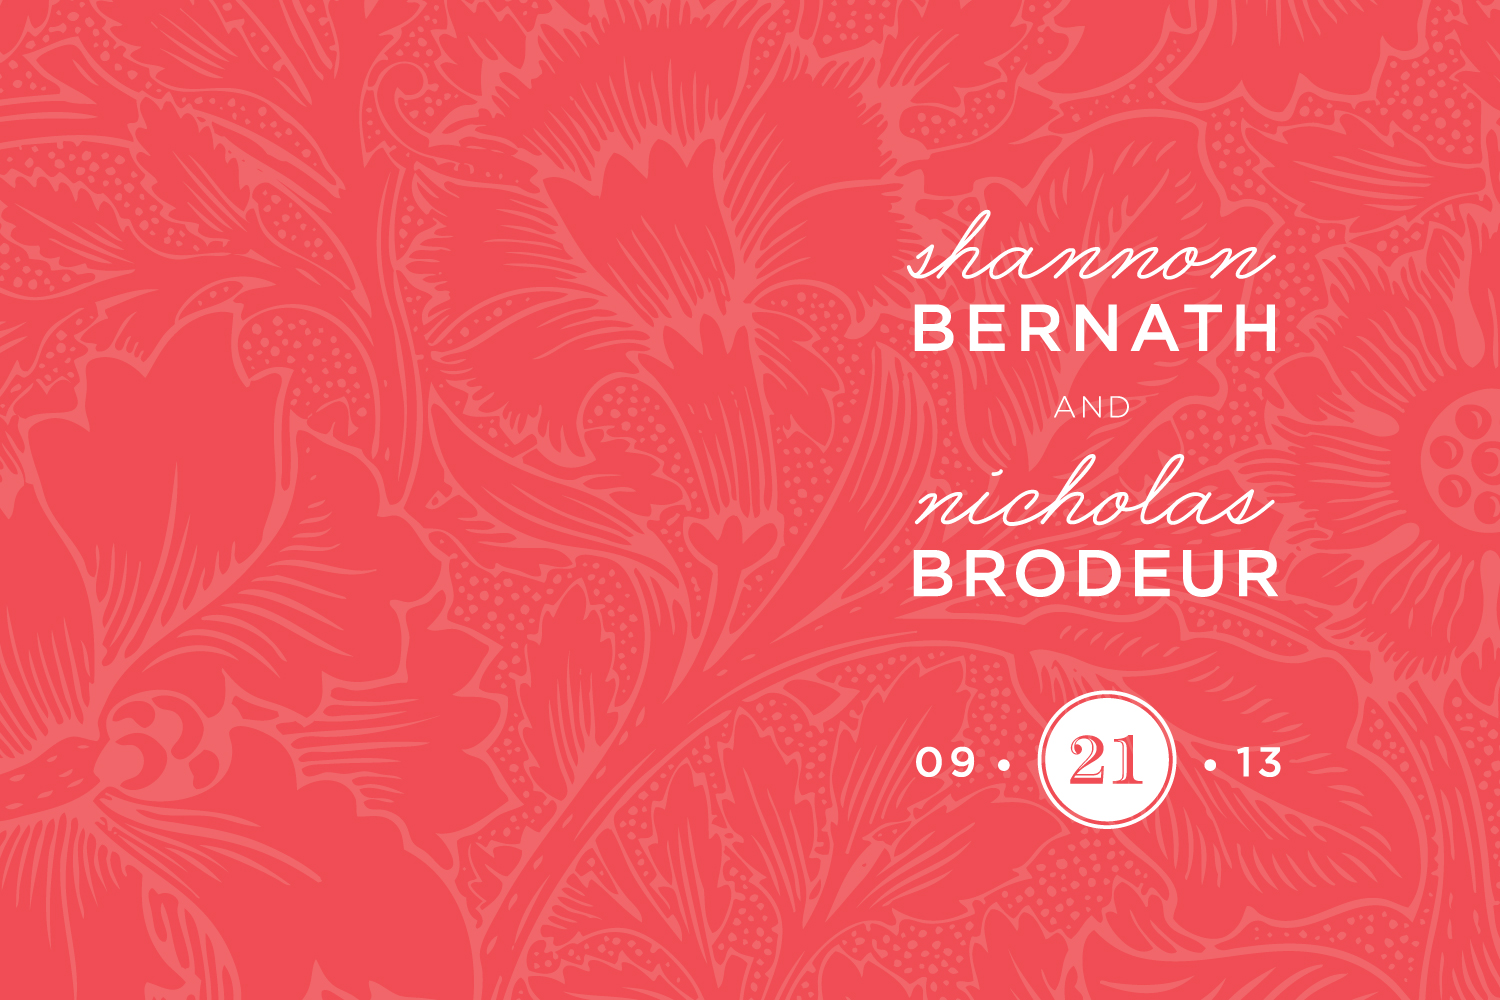 wedding invitation design for bernath/brodeur wedding, bright coral with subtle floral background pattern, wedding date logo, handwriting font, print design